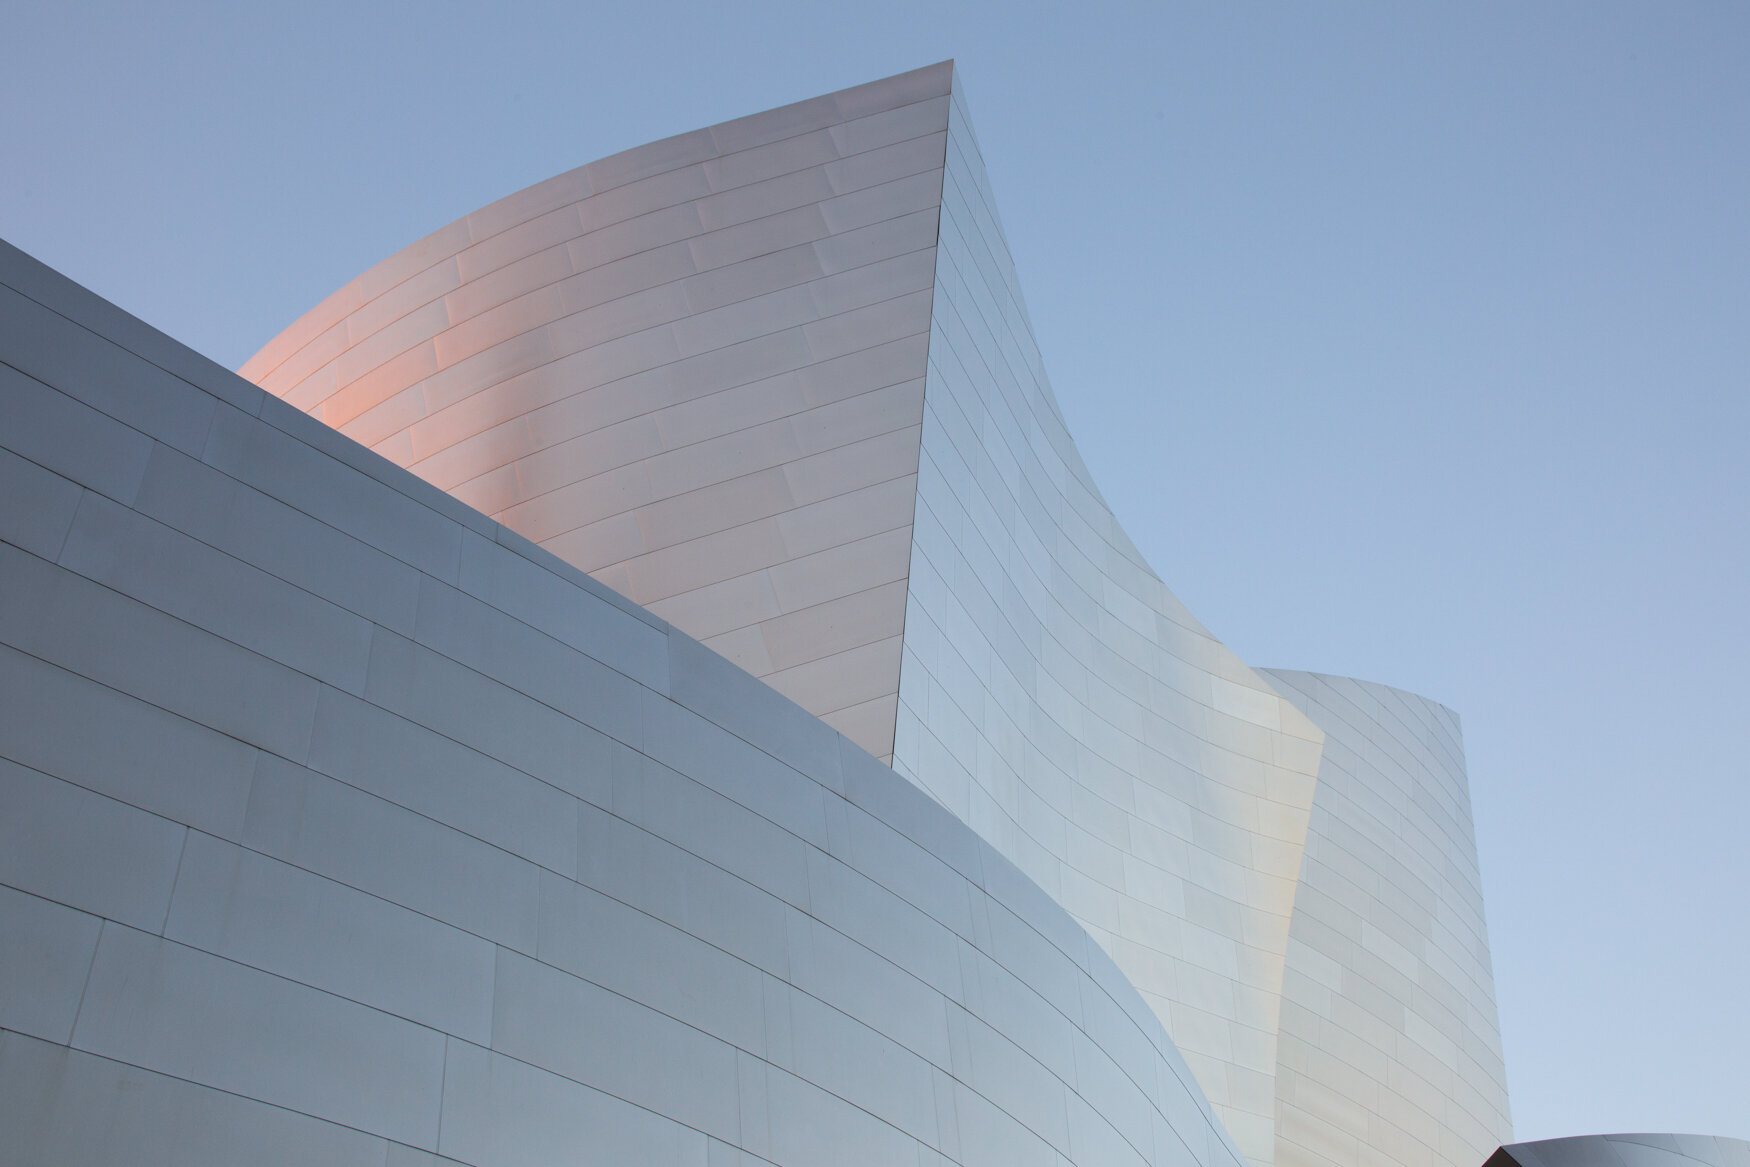 WALT DISNEY CONCERT HALL, Frank Gehry